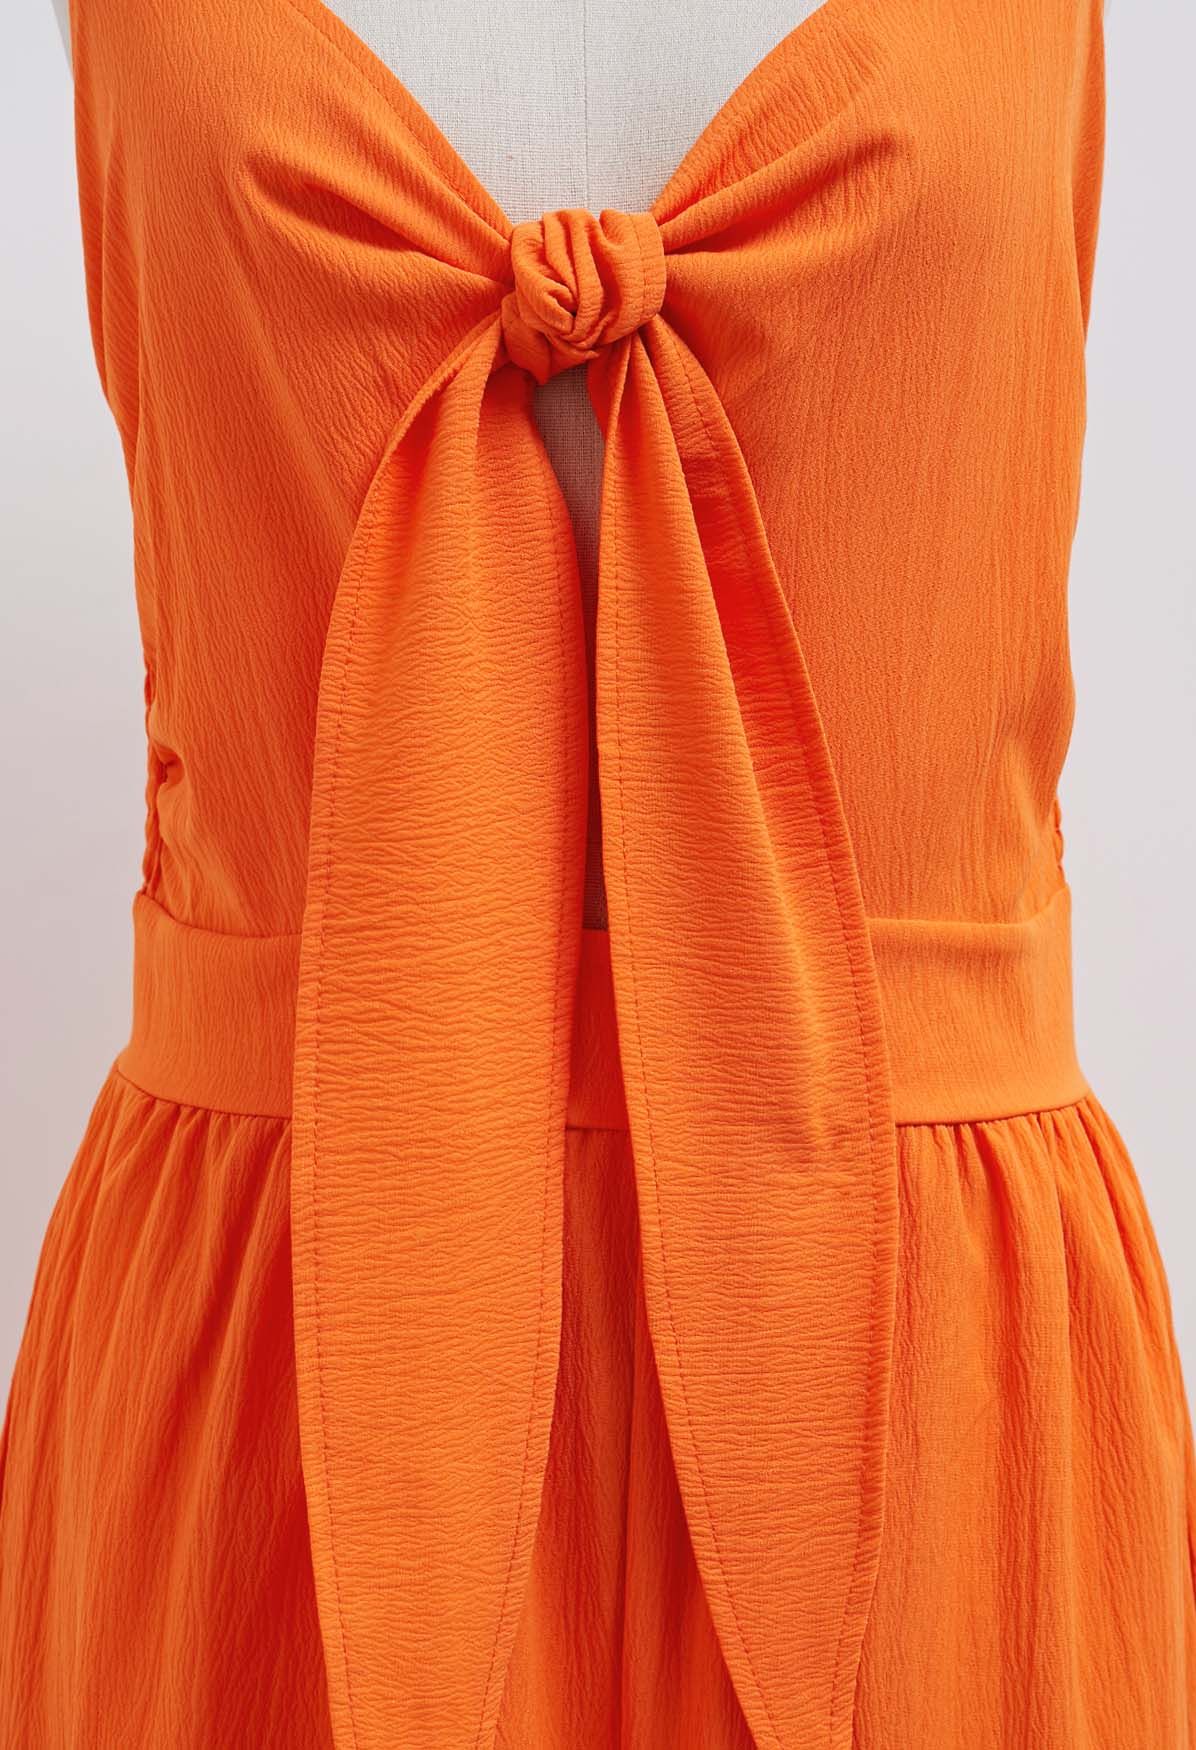 Front Tie Knot Side Pockets Jumpsuit in Orange